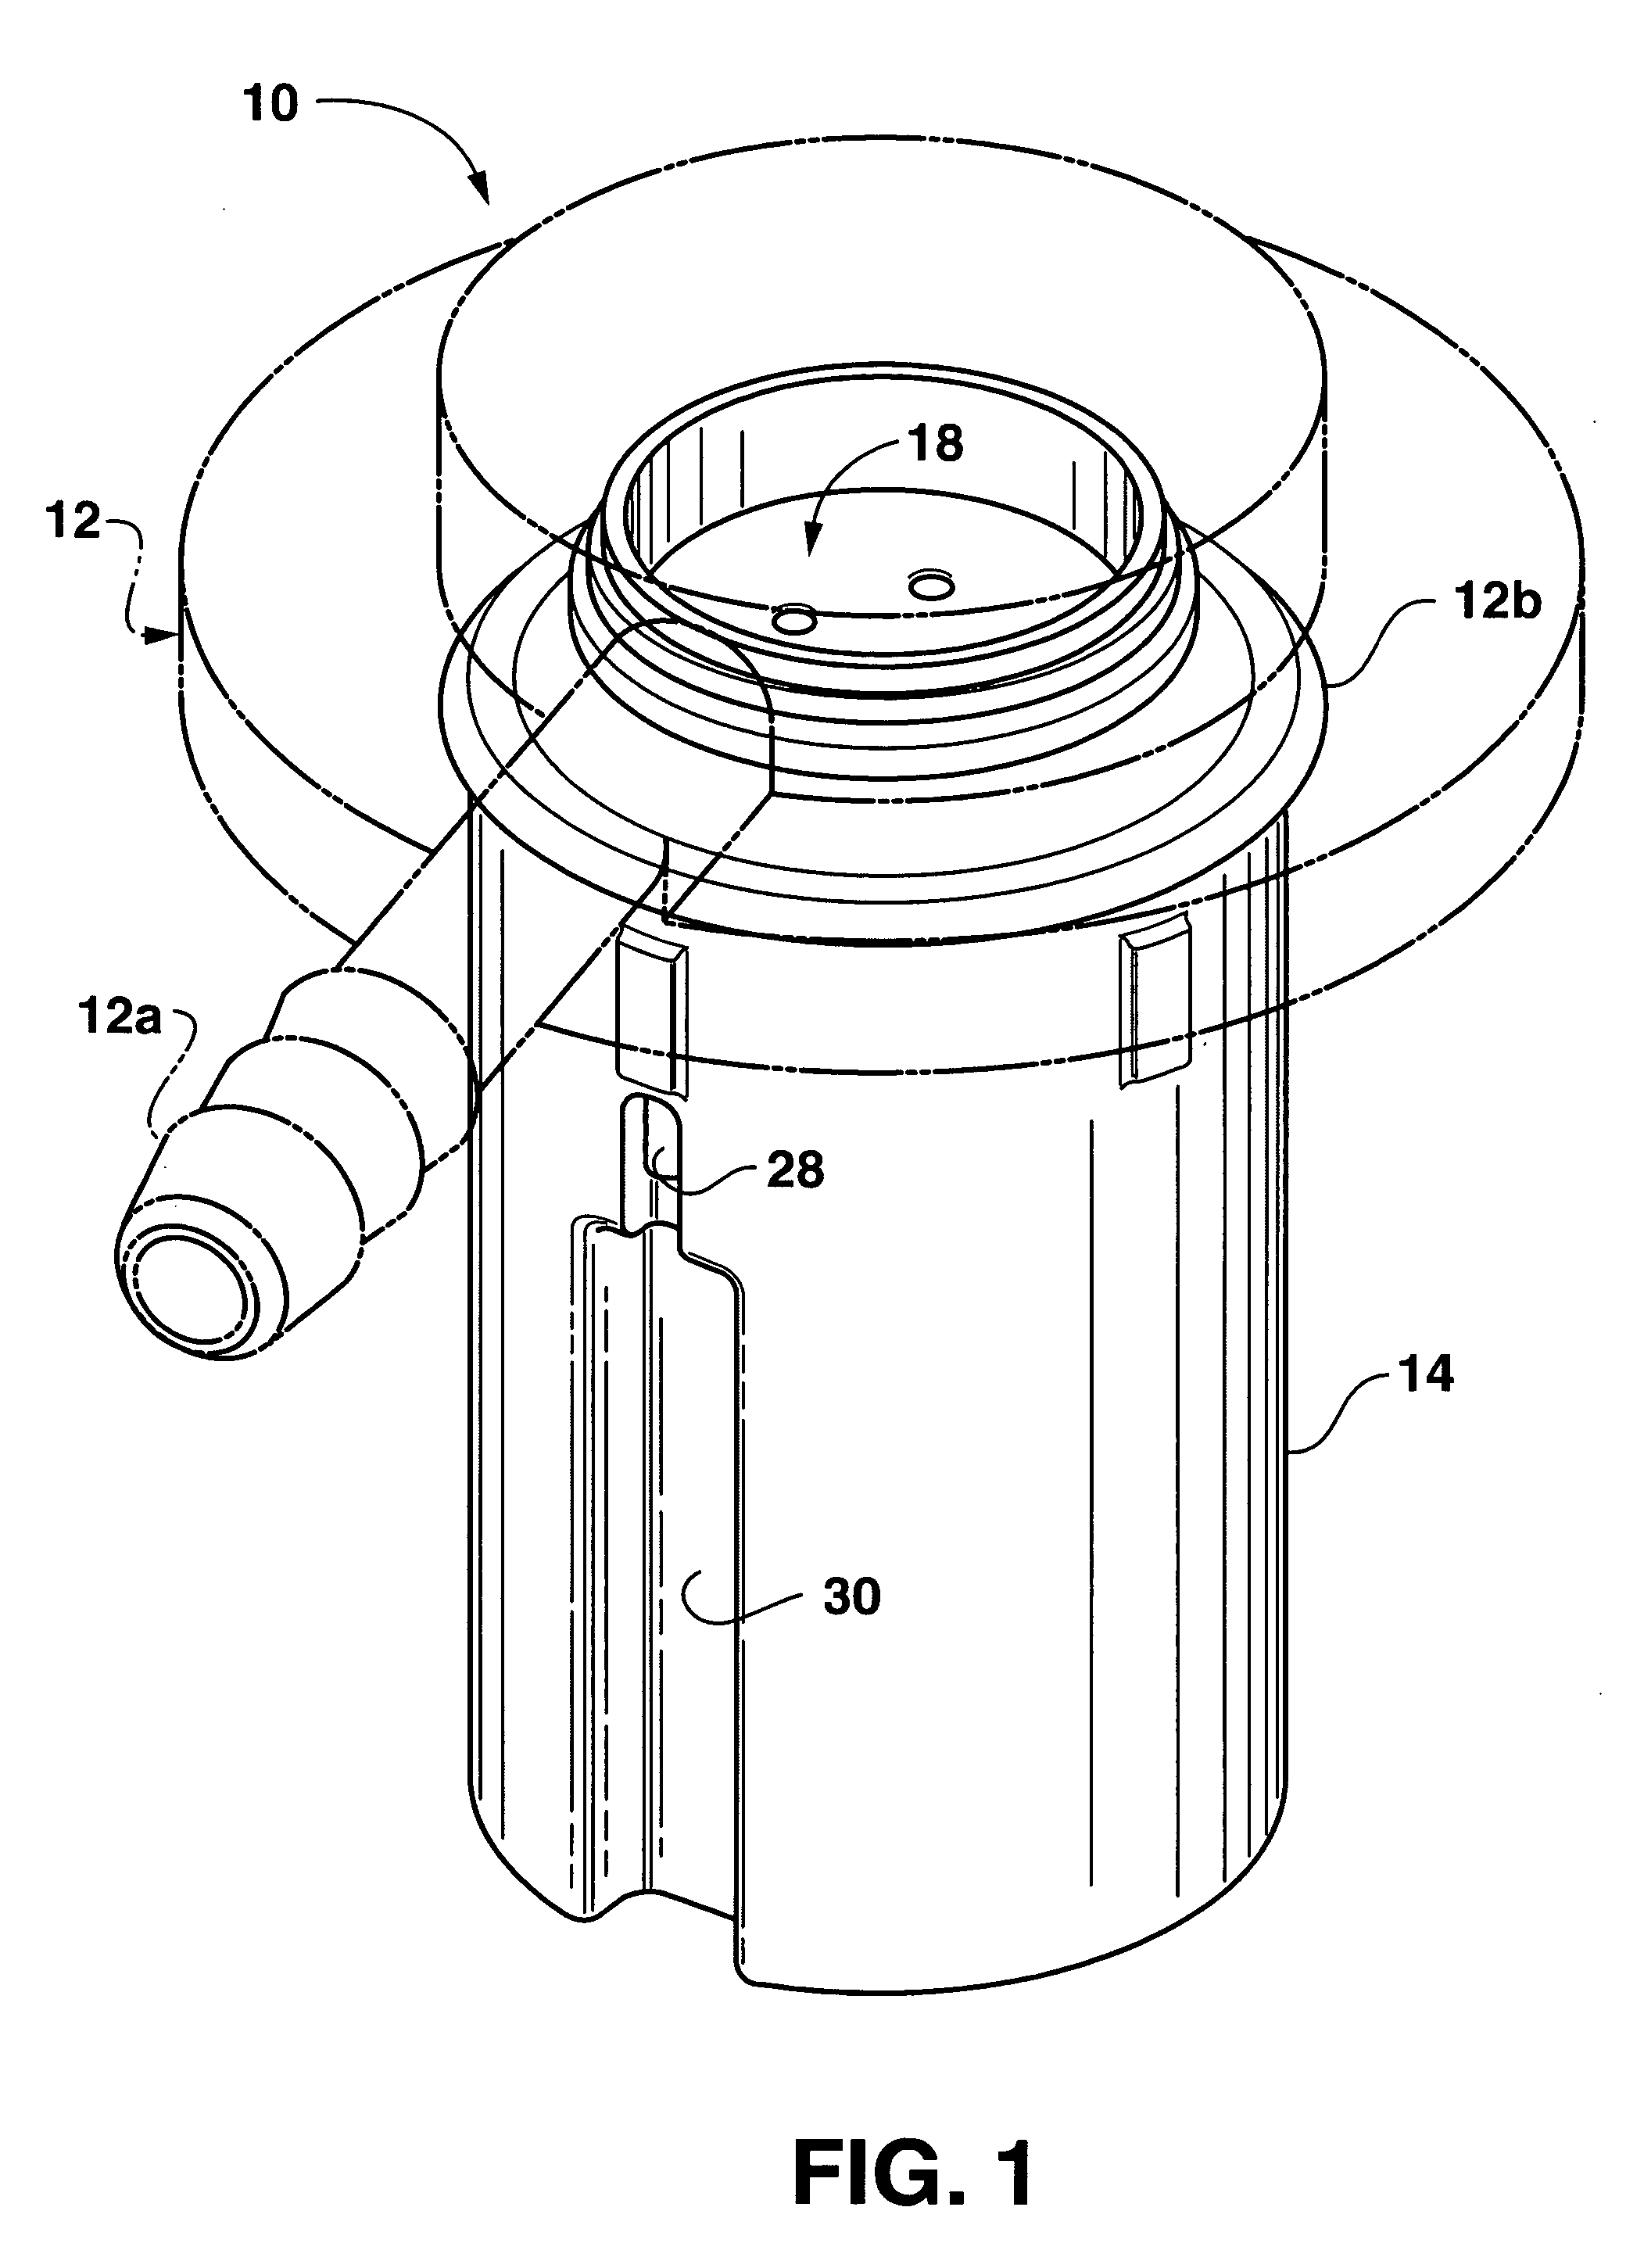 Vent valve assembly with lever arrangement